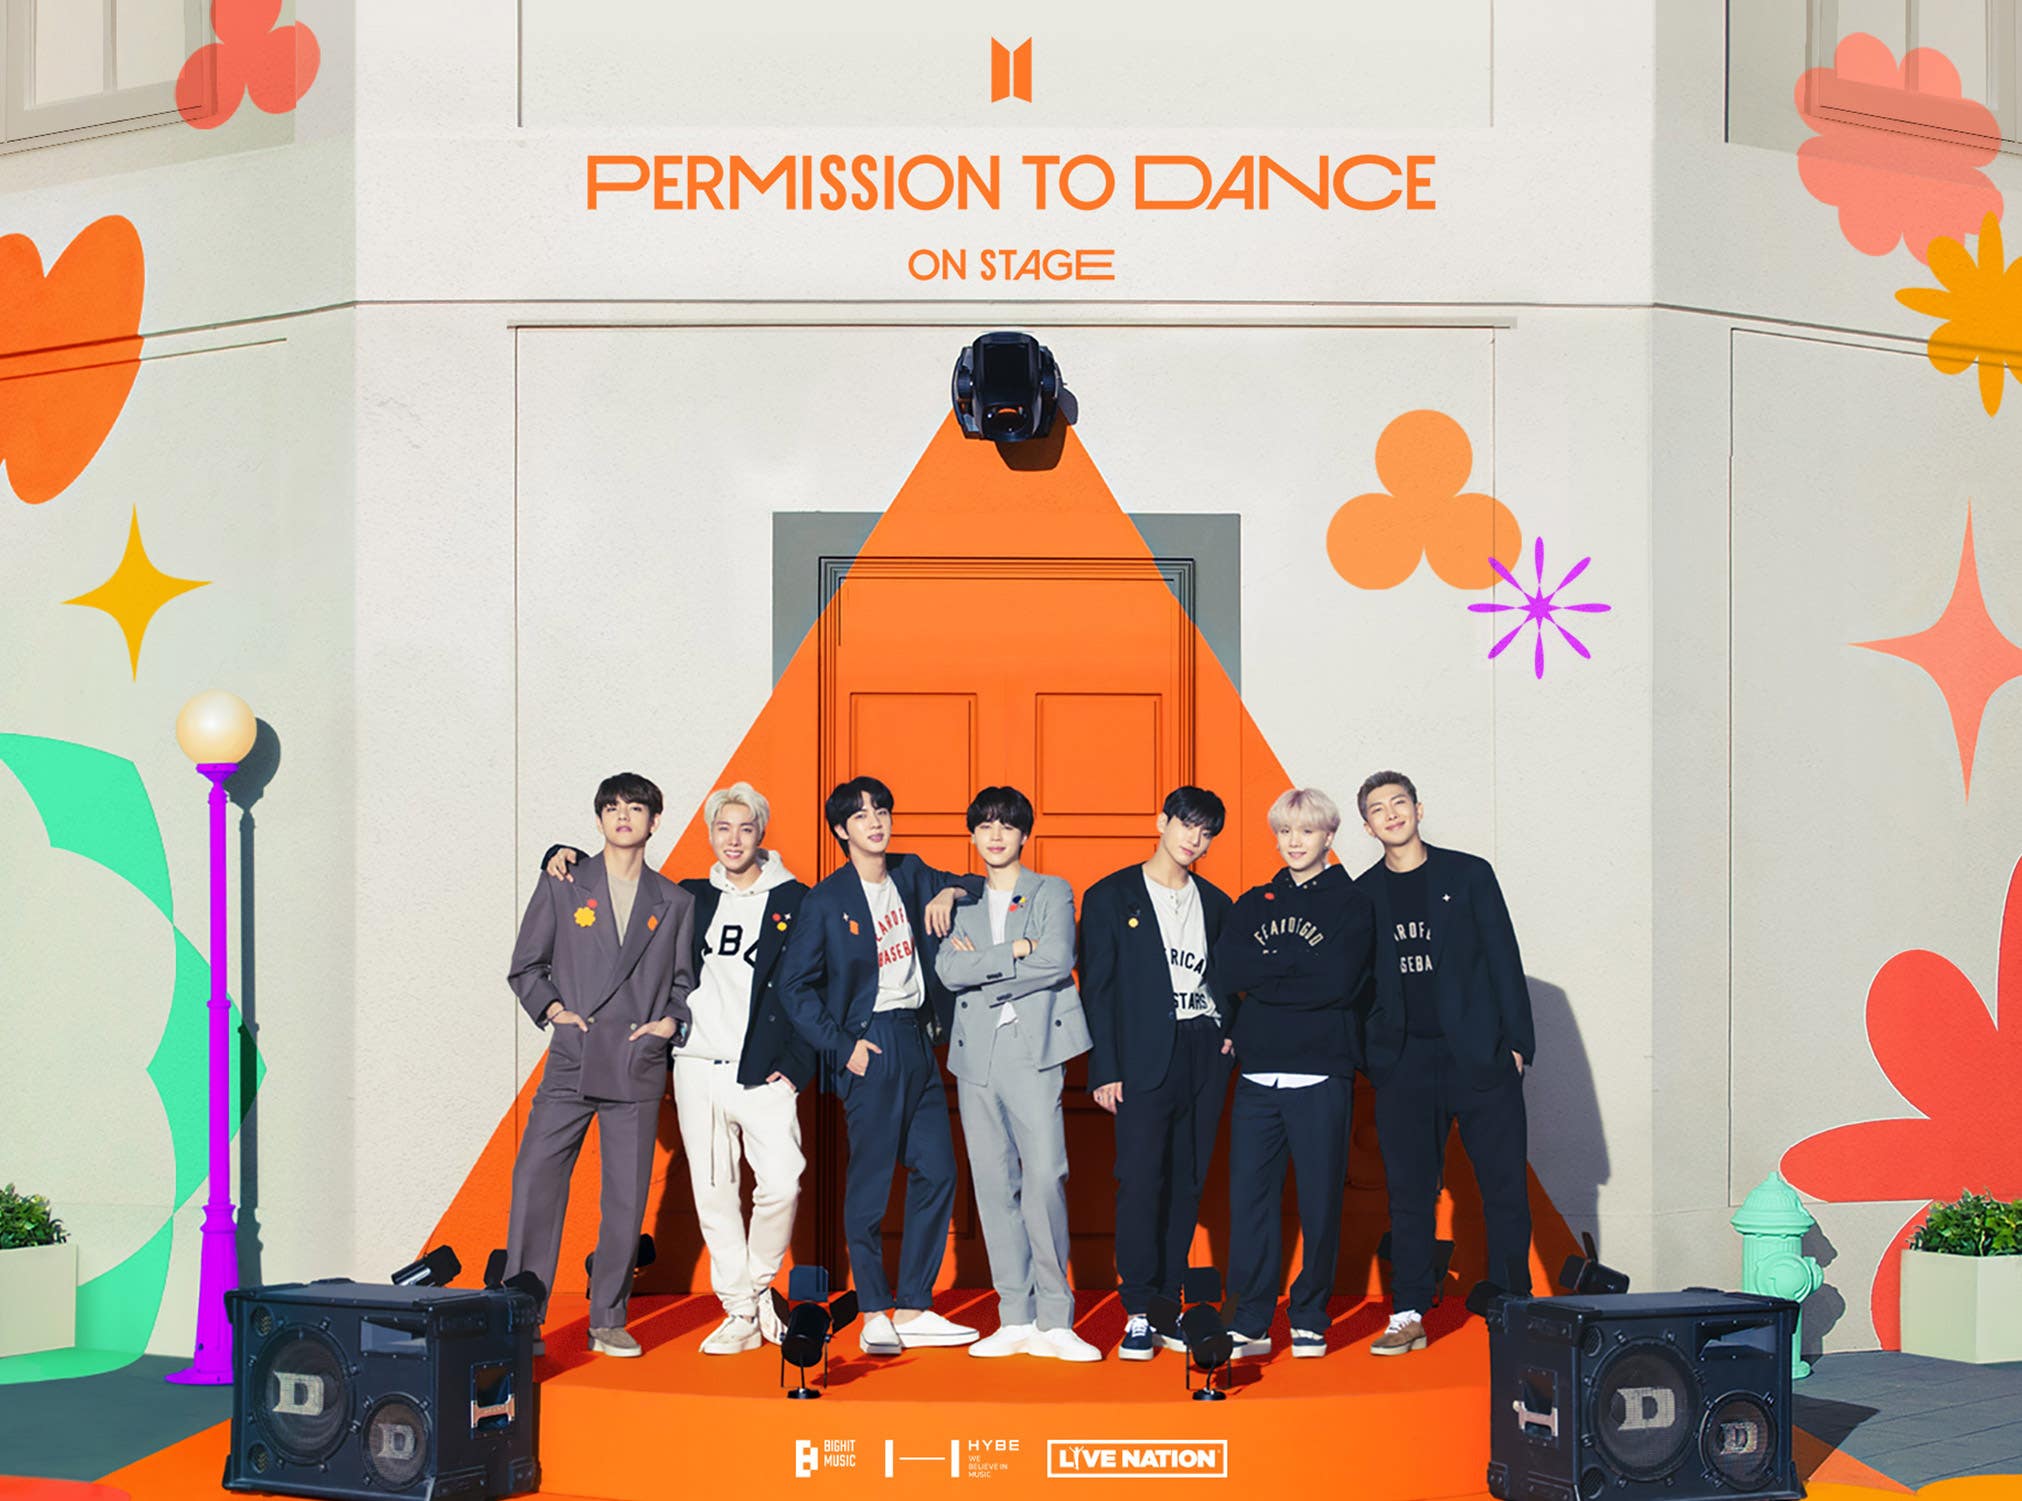 BTS: Permission to Dance on Stage at SoFi Stadium